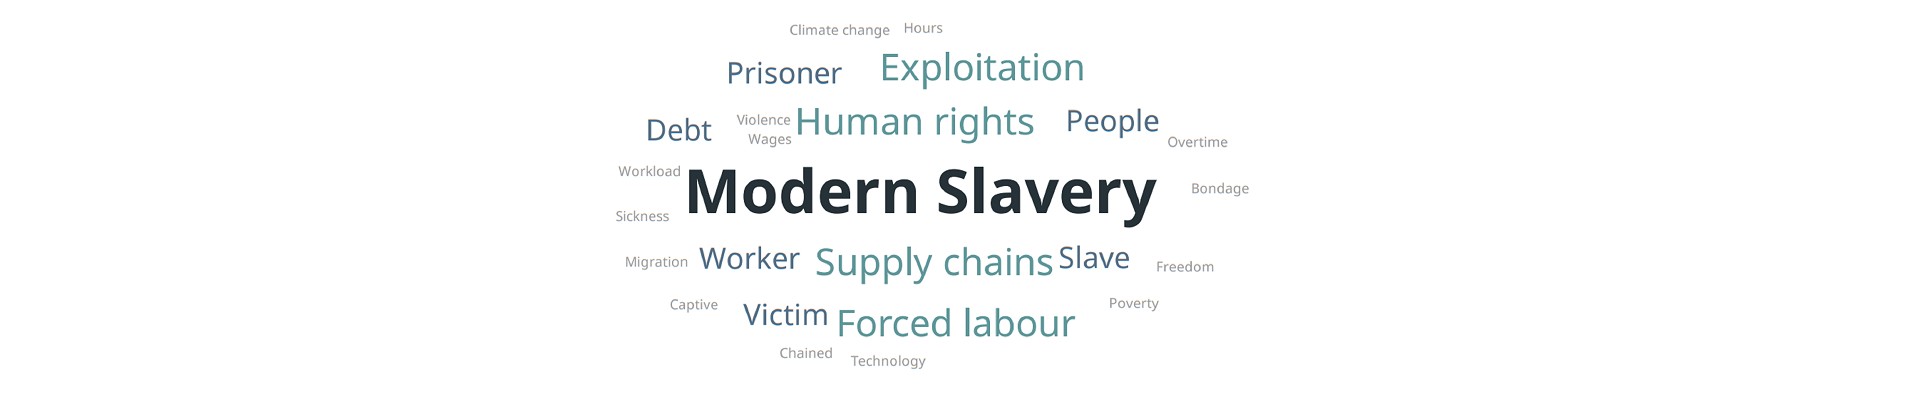 Modern Slavery External Briefing